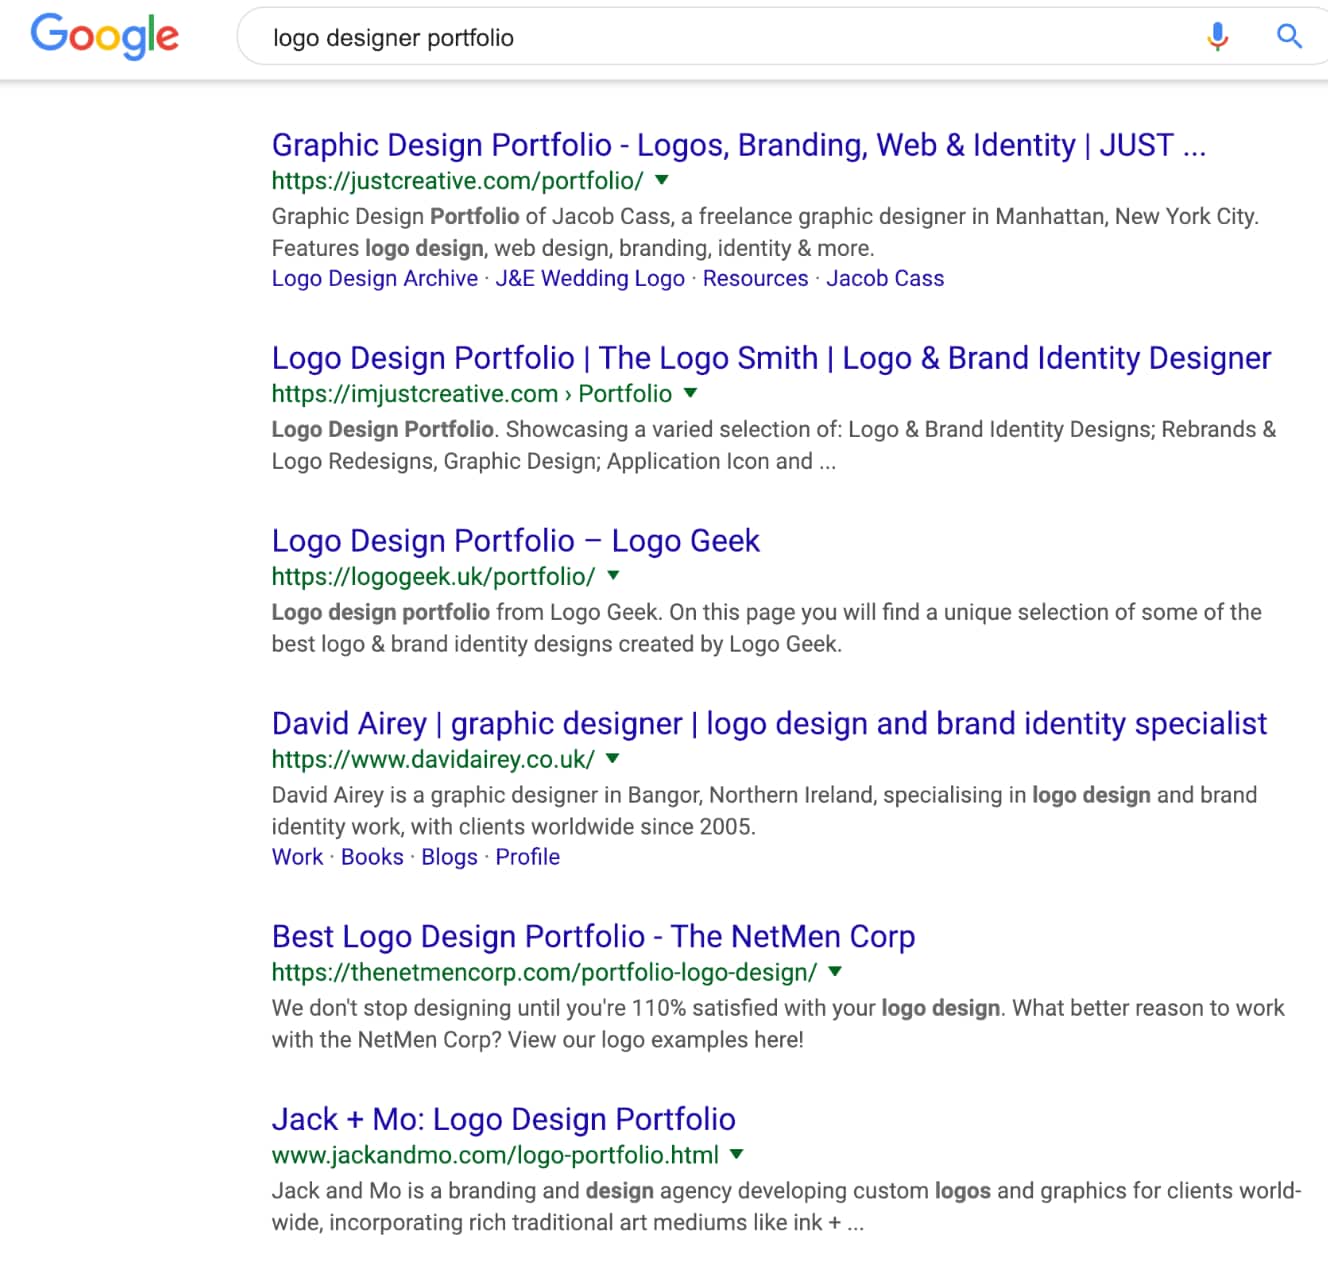 Google 1st page search results for ‘logo designer portfolio’